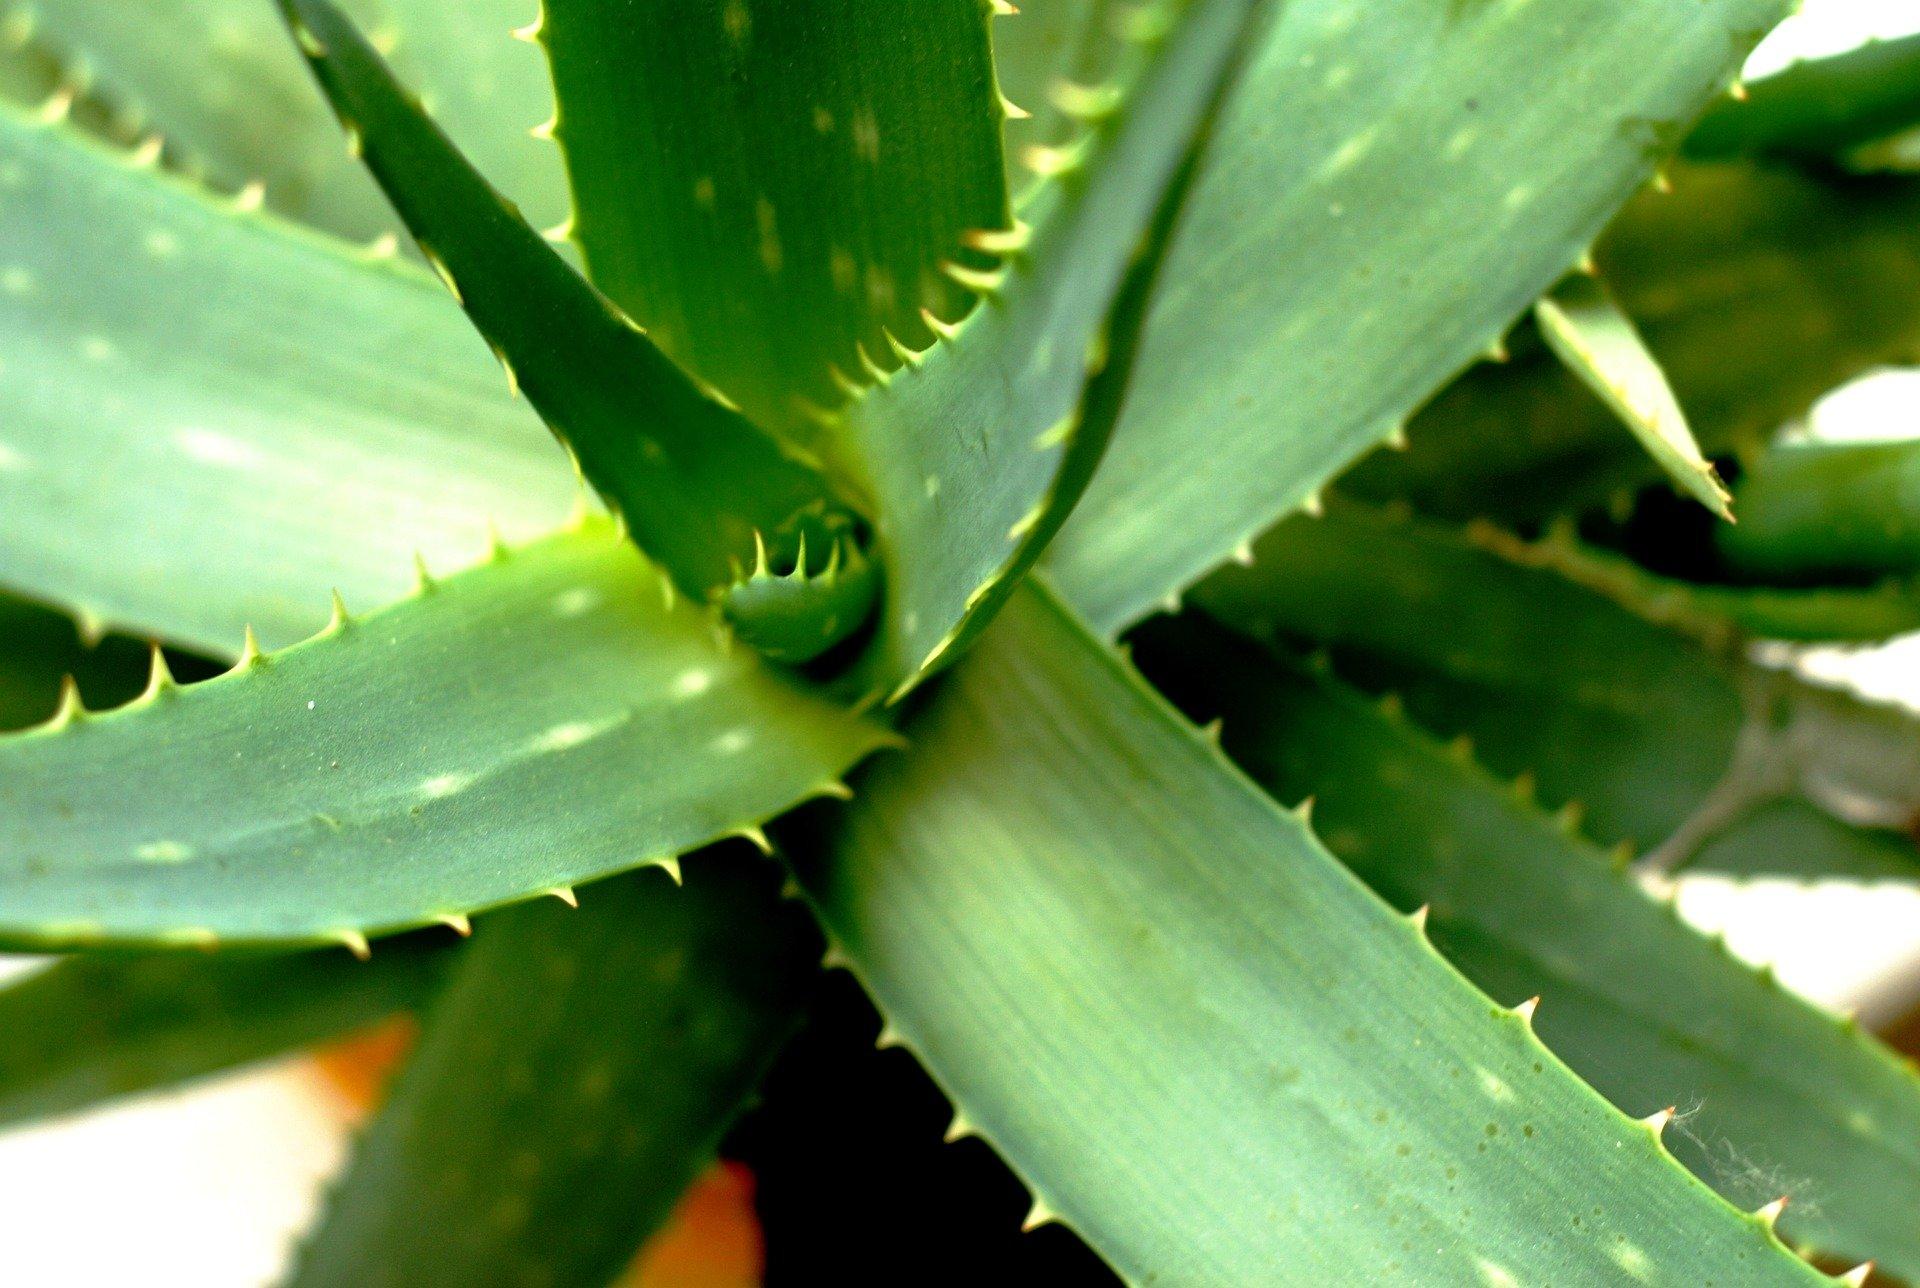 Plant Aloe Vera